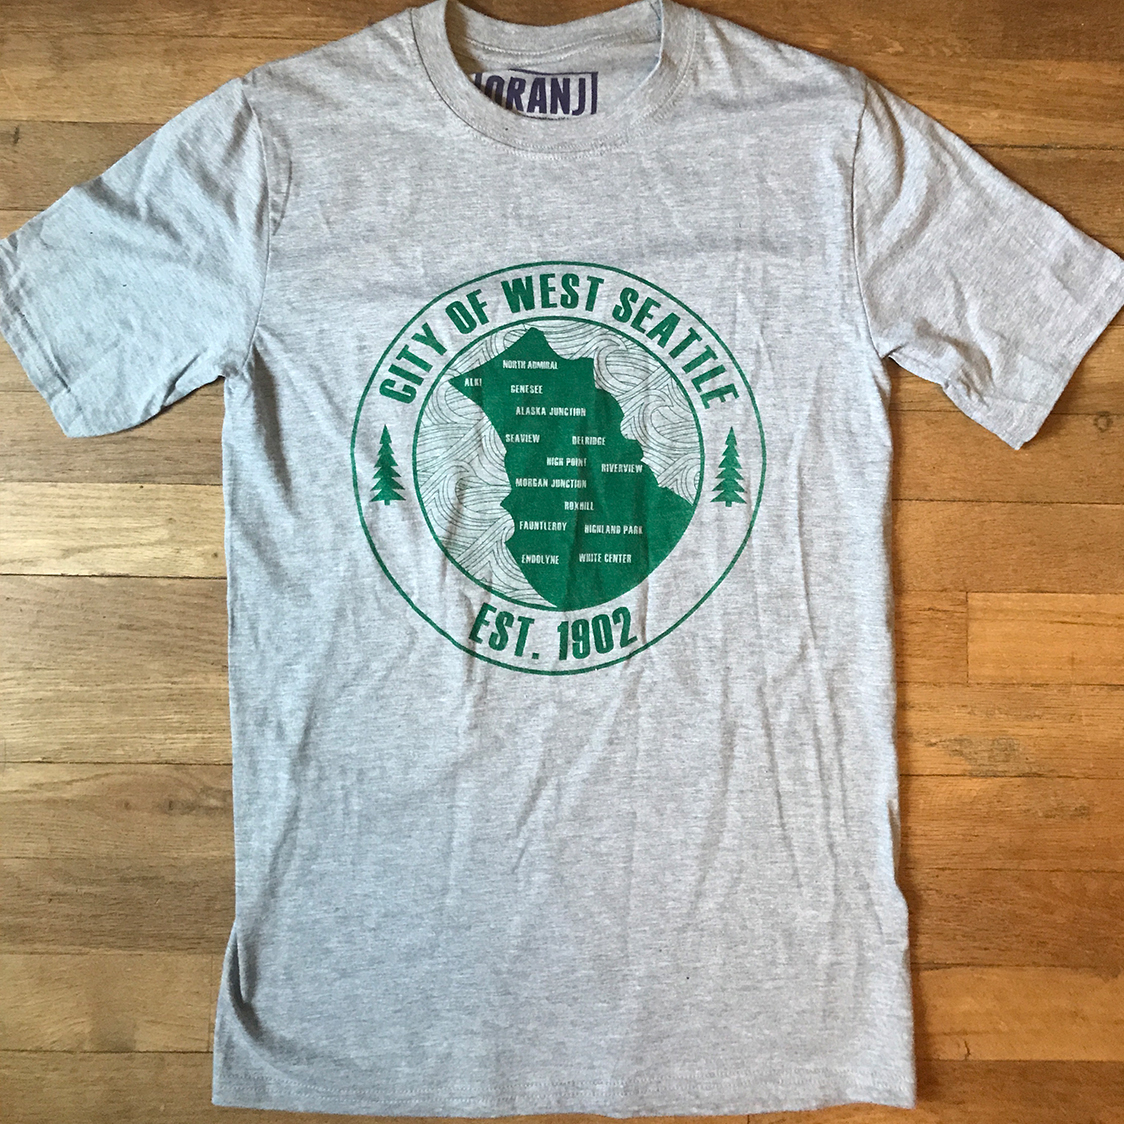 City of West Seattle T-shirt – ORANJ